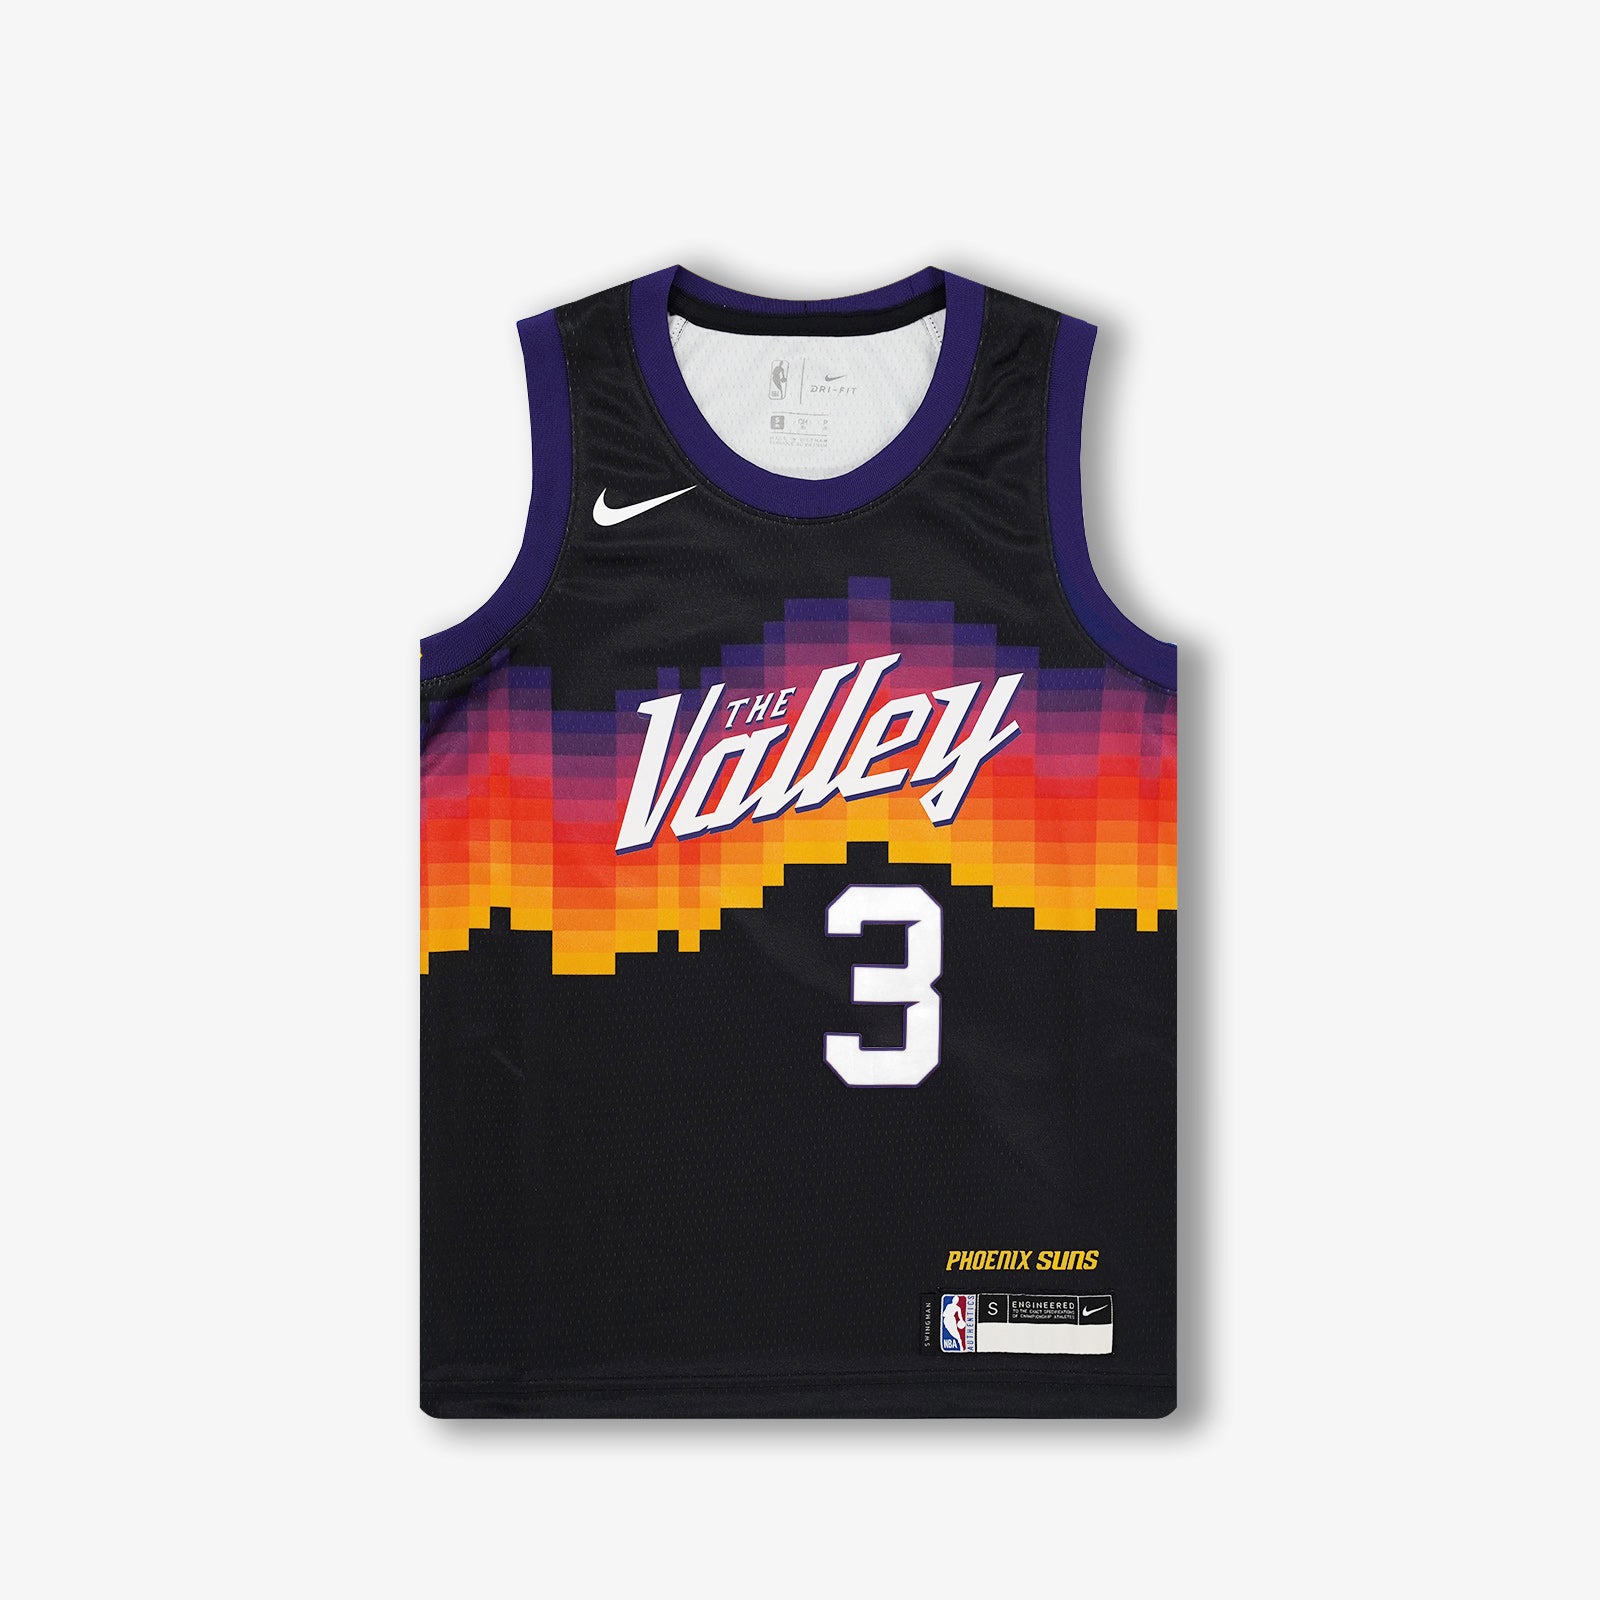 Chris Paul Nike Authentic Phoenix Suns Jerseys 